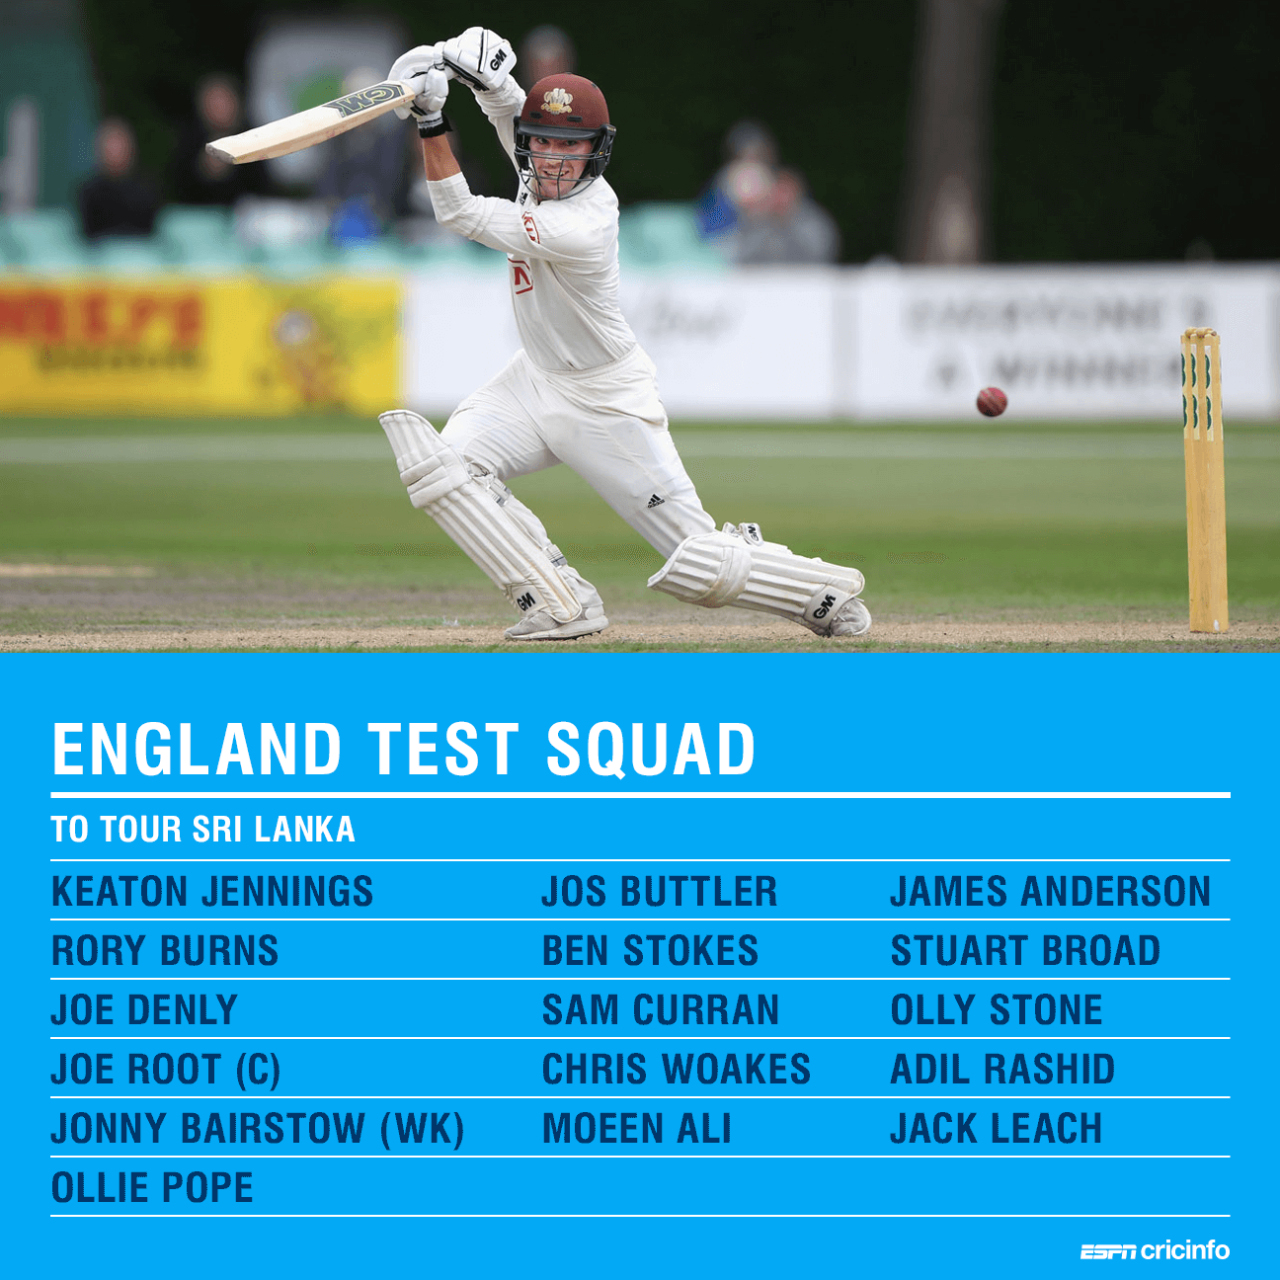 England Test squad for tour of Sri Lanka